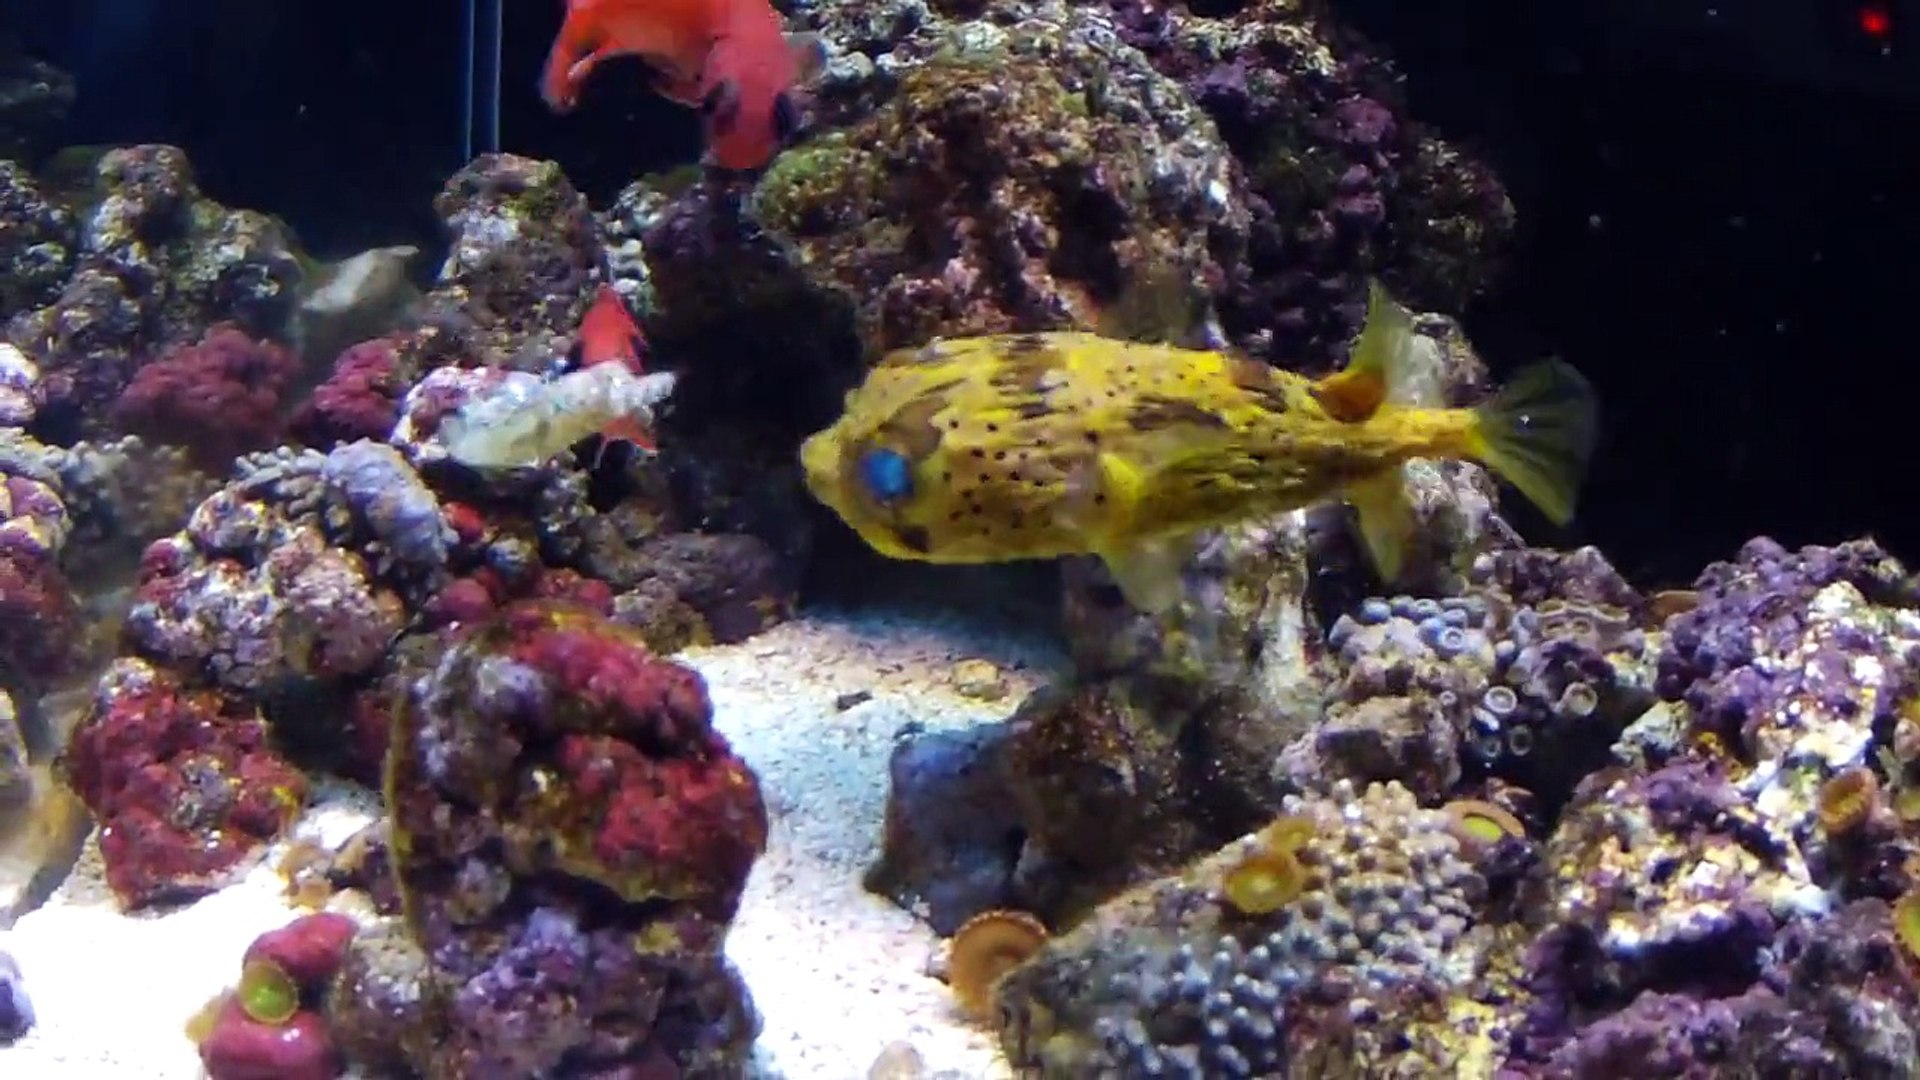 Aquarium Porcupine Pufferfish feeding on live Shrimp